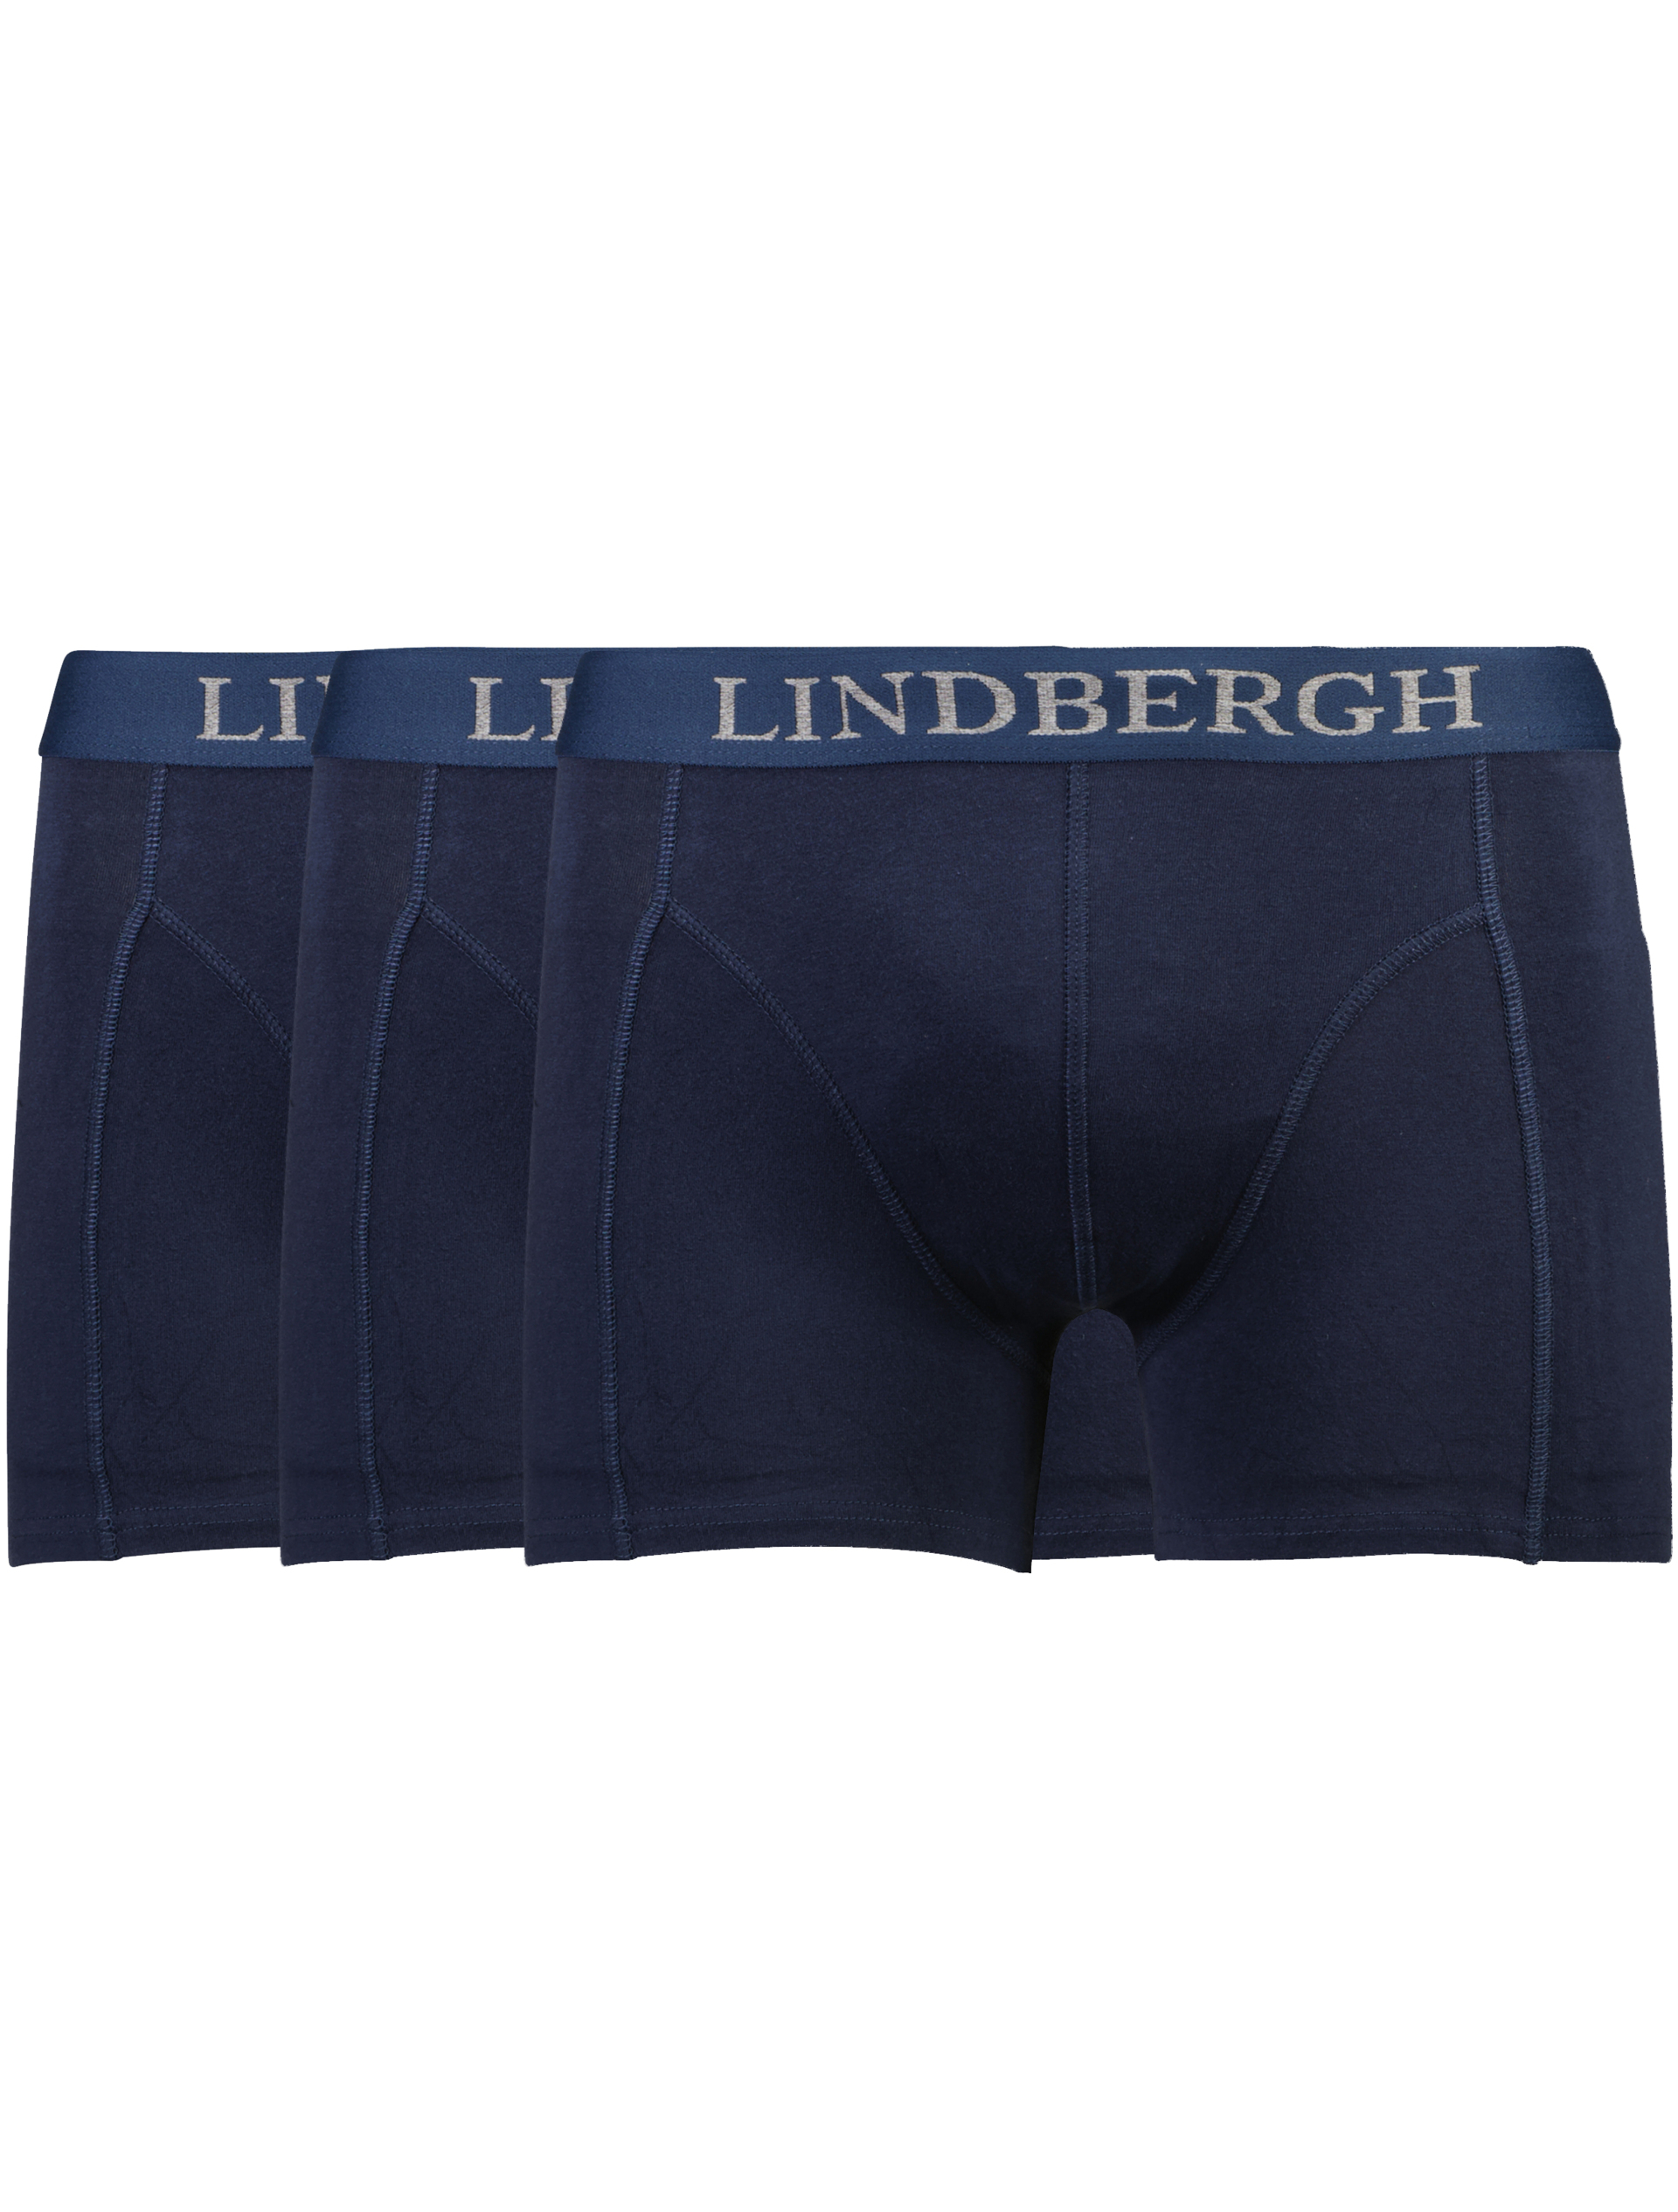 Lindbergh Tights blue / navy